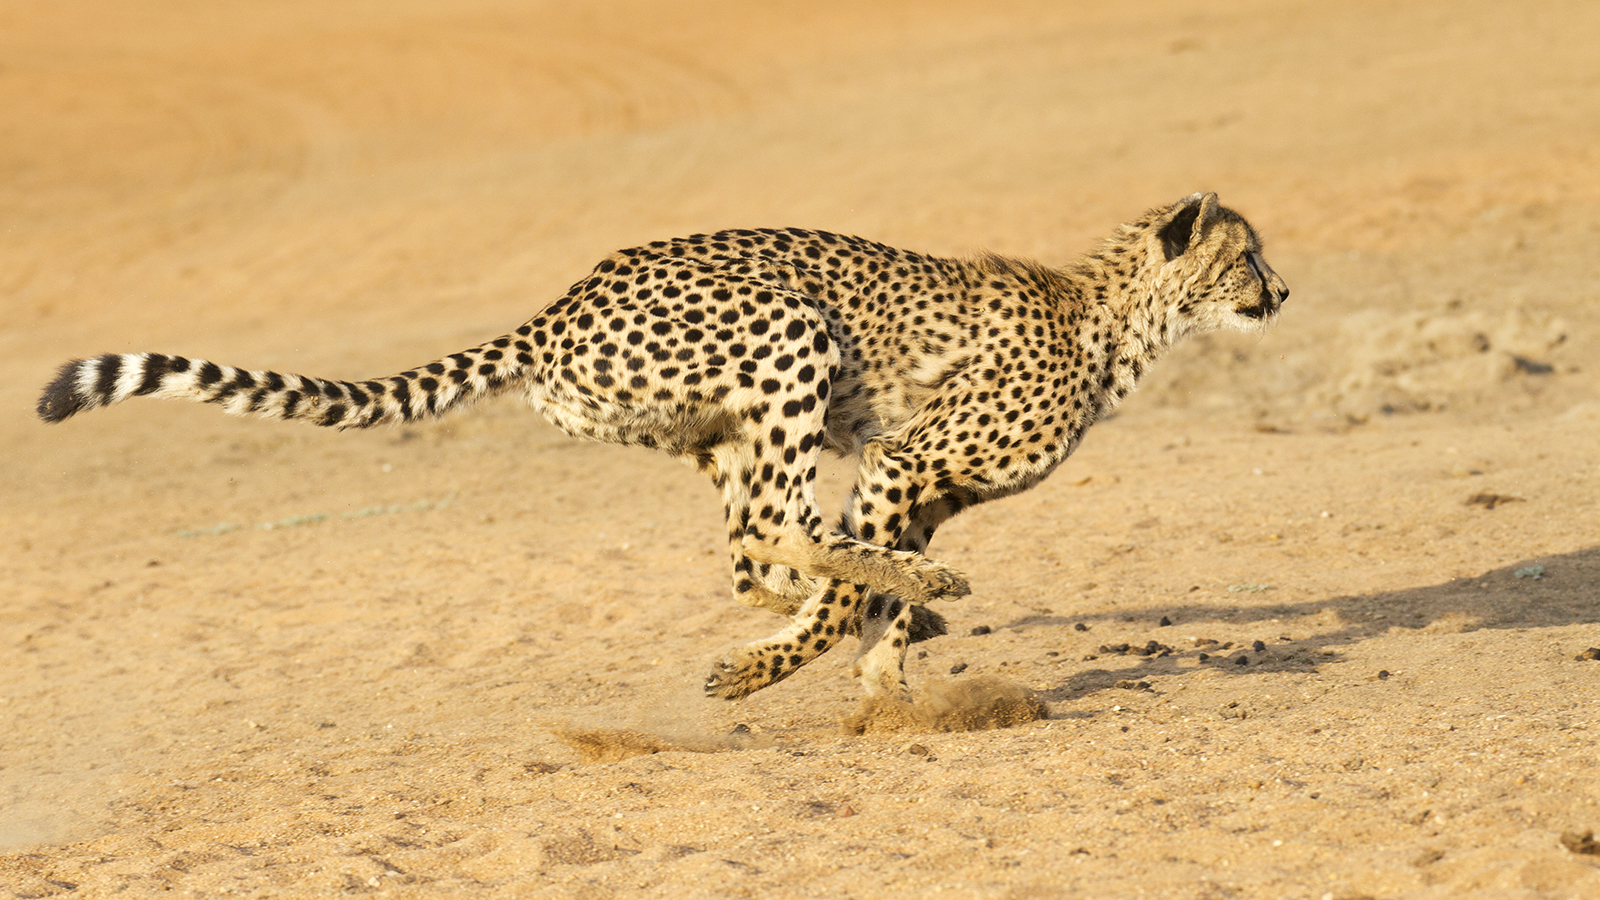 http://www.dreamstime.com/royalty-free-stock-photos-cheetah-running-acinonyx-jubatus-south-africa-image29434738